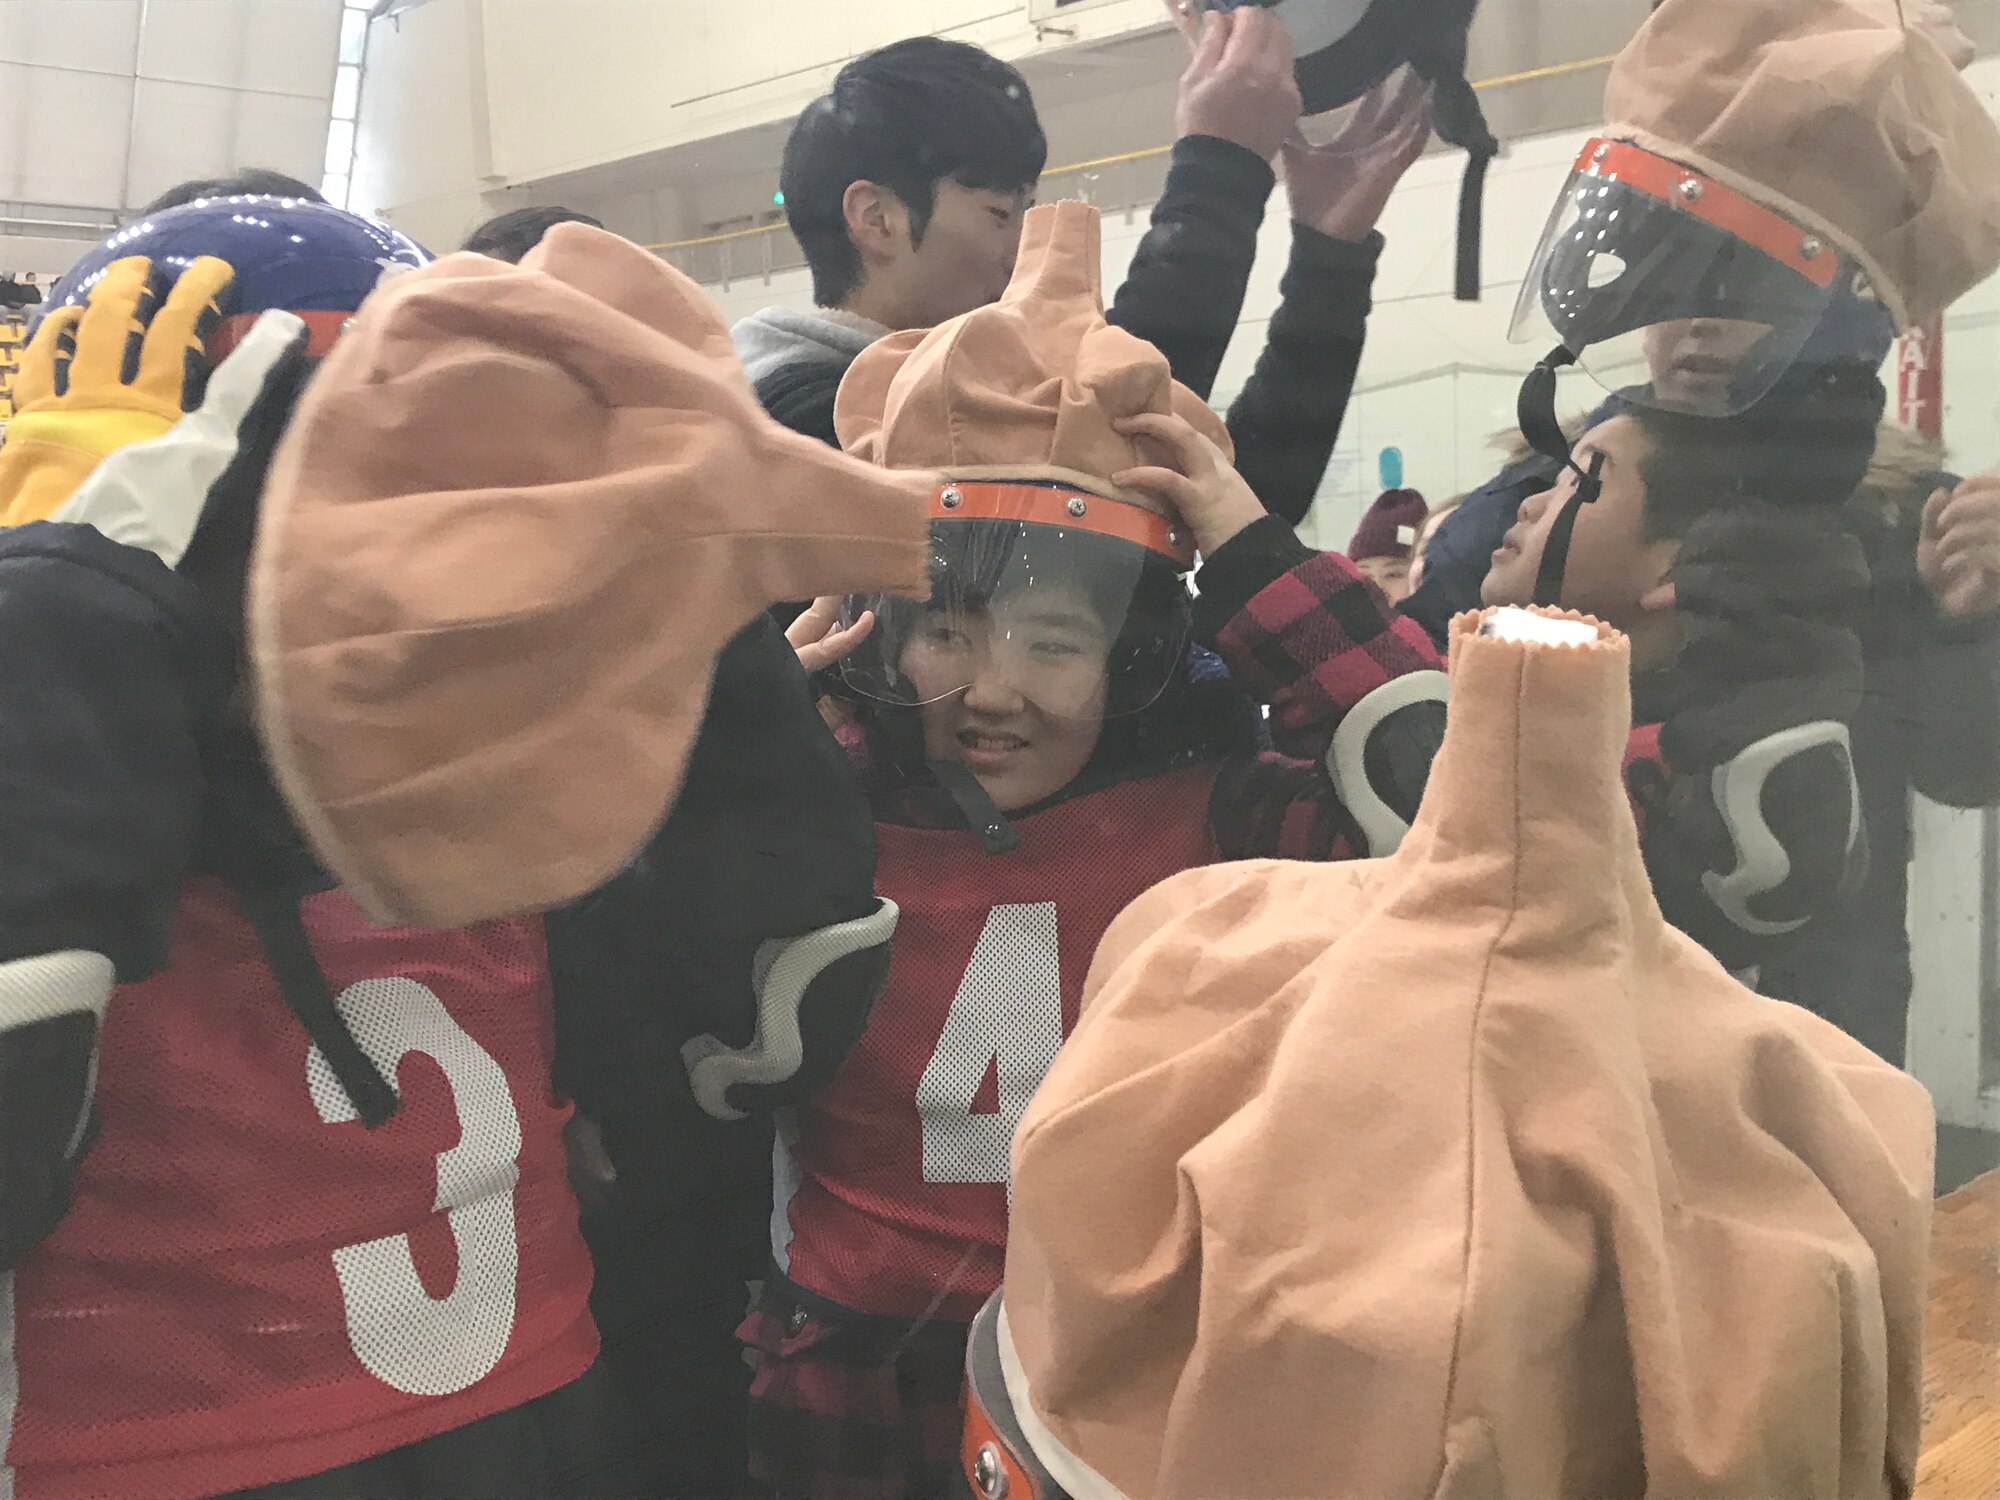 Misawa City and Misawa Air Base kids competed in the 6th Misawa Ice Hockey Exhibition at the Misawa International Center Hockey Arena Jan 27, 2018.